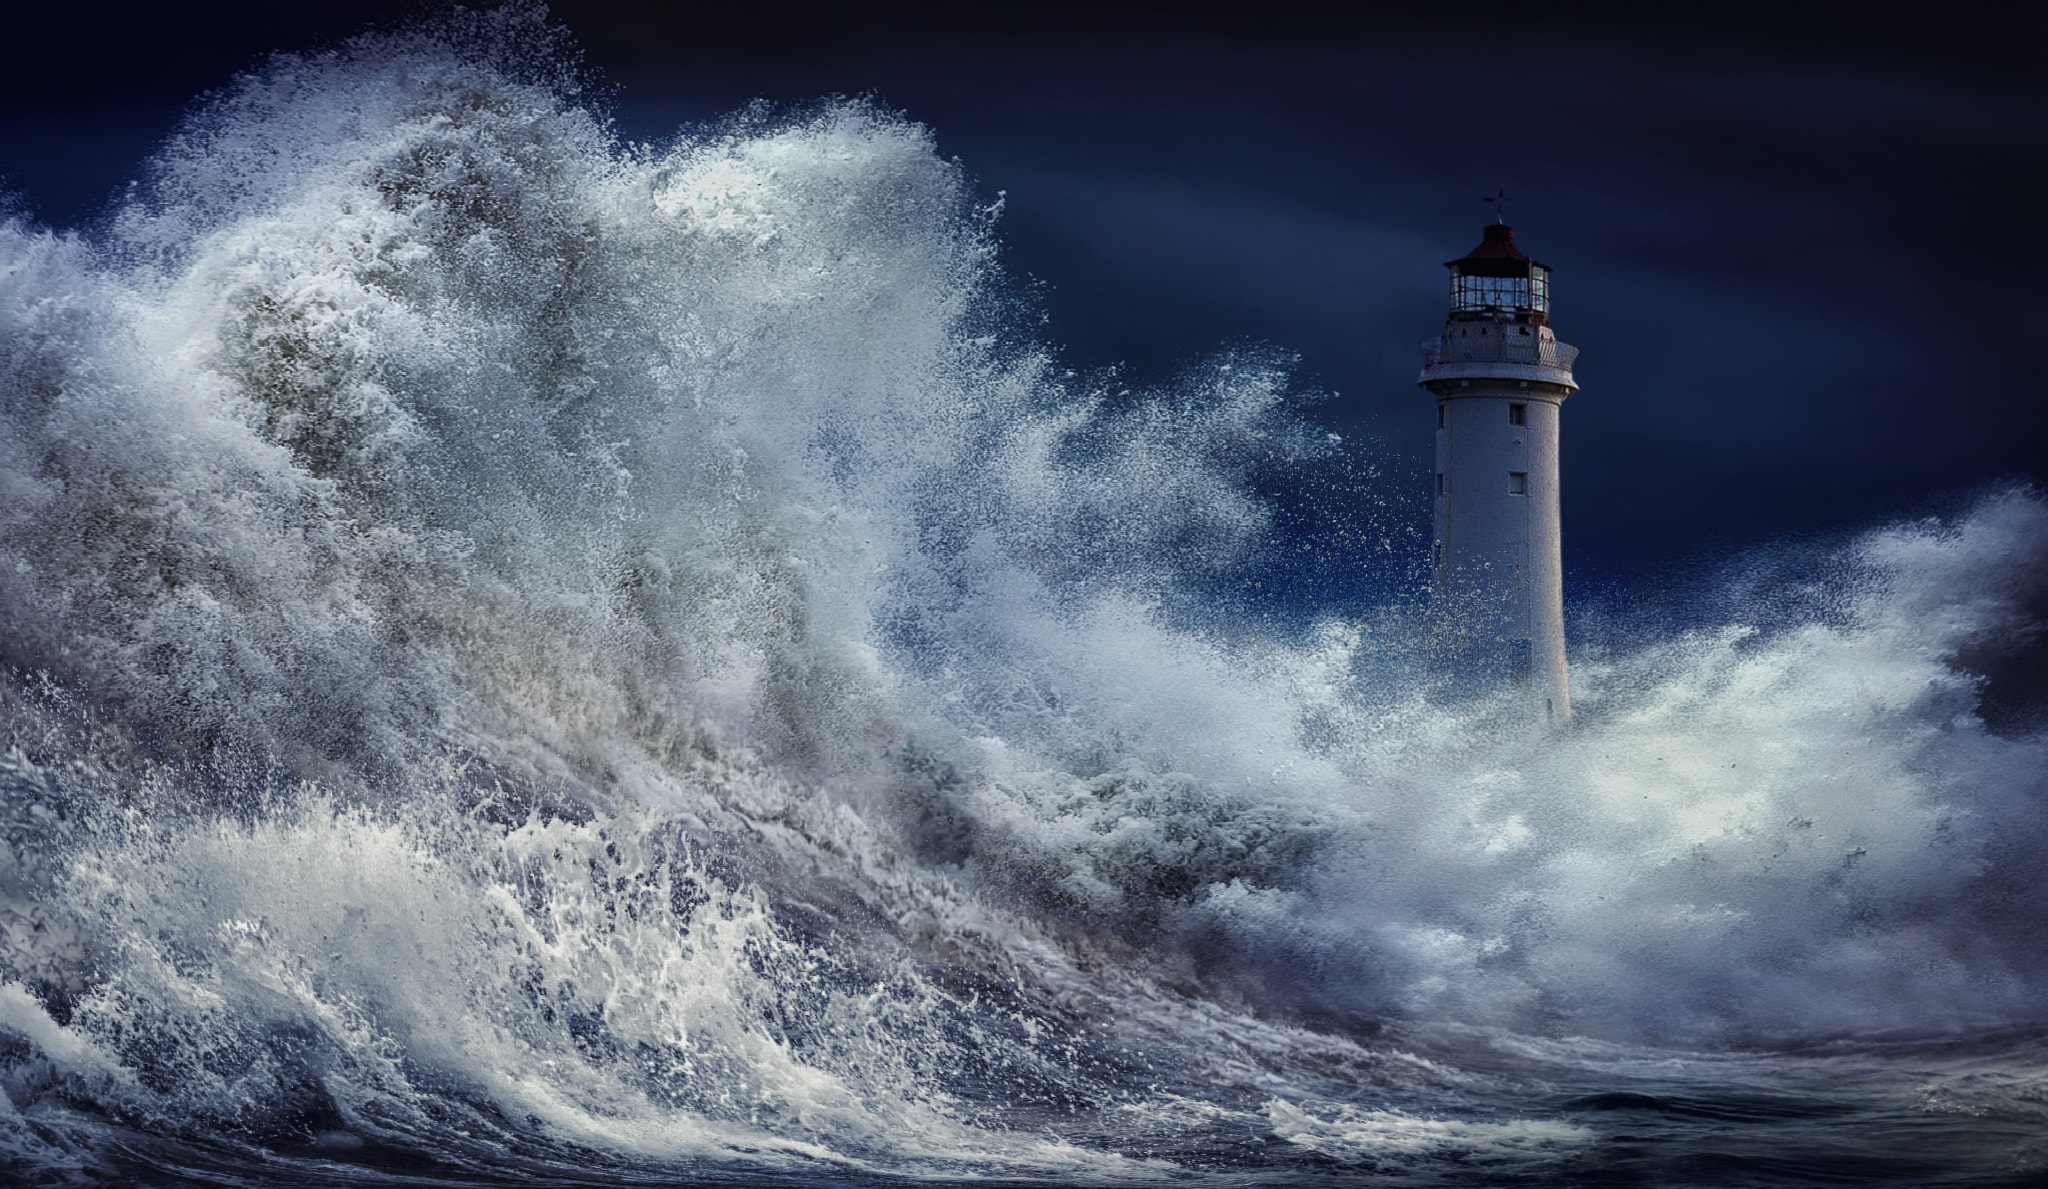 General 2048x1189 digital art 500px Nikos Bantouvakis storm waves sea lighthouse